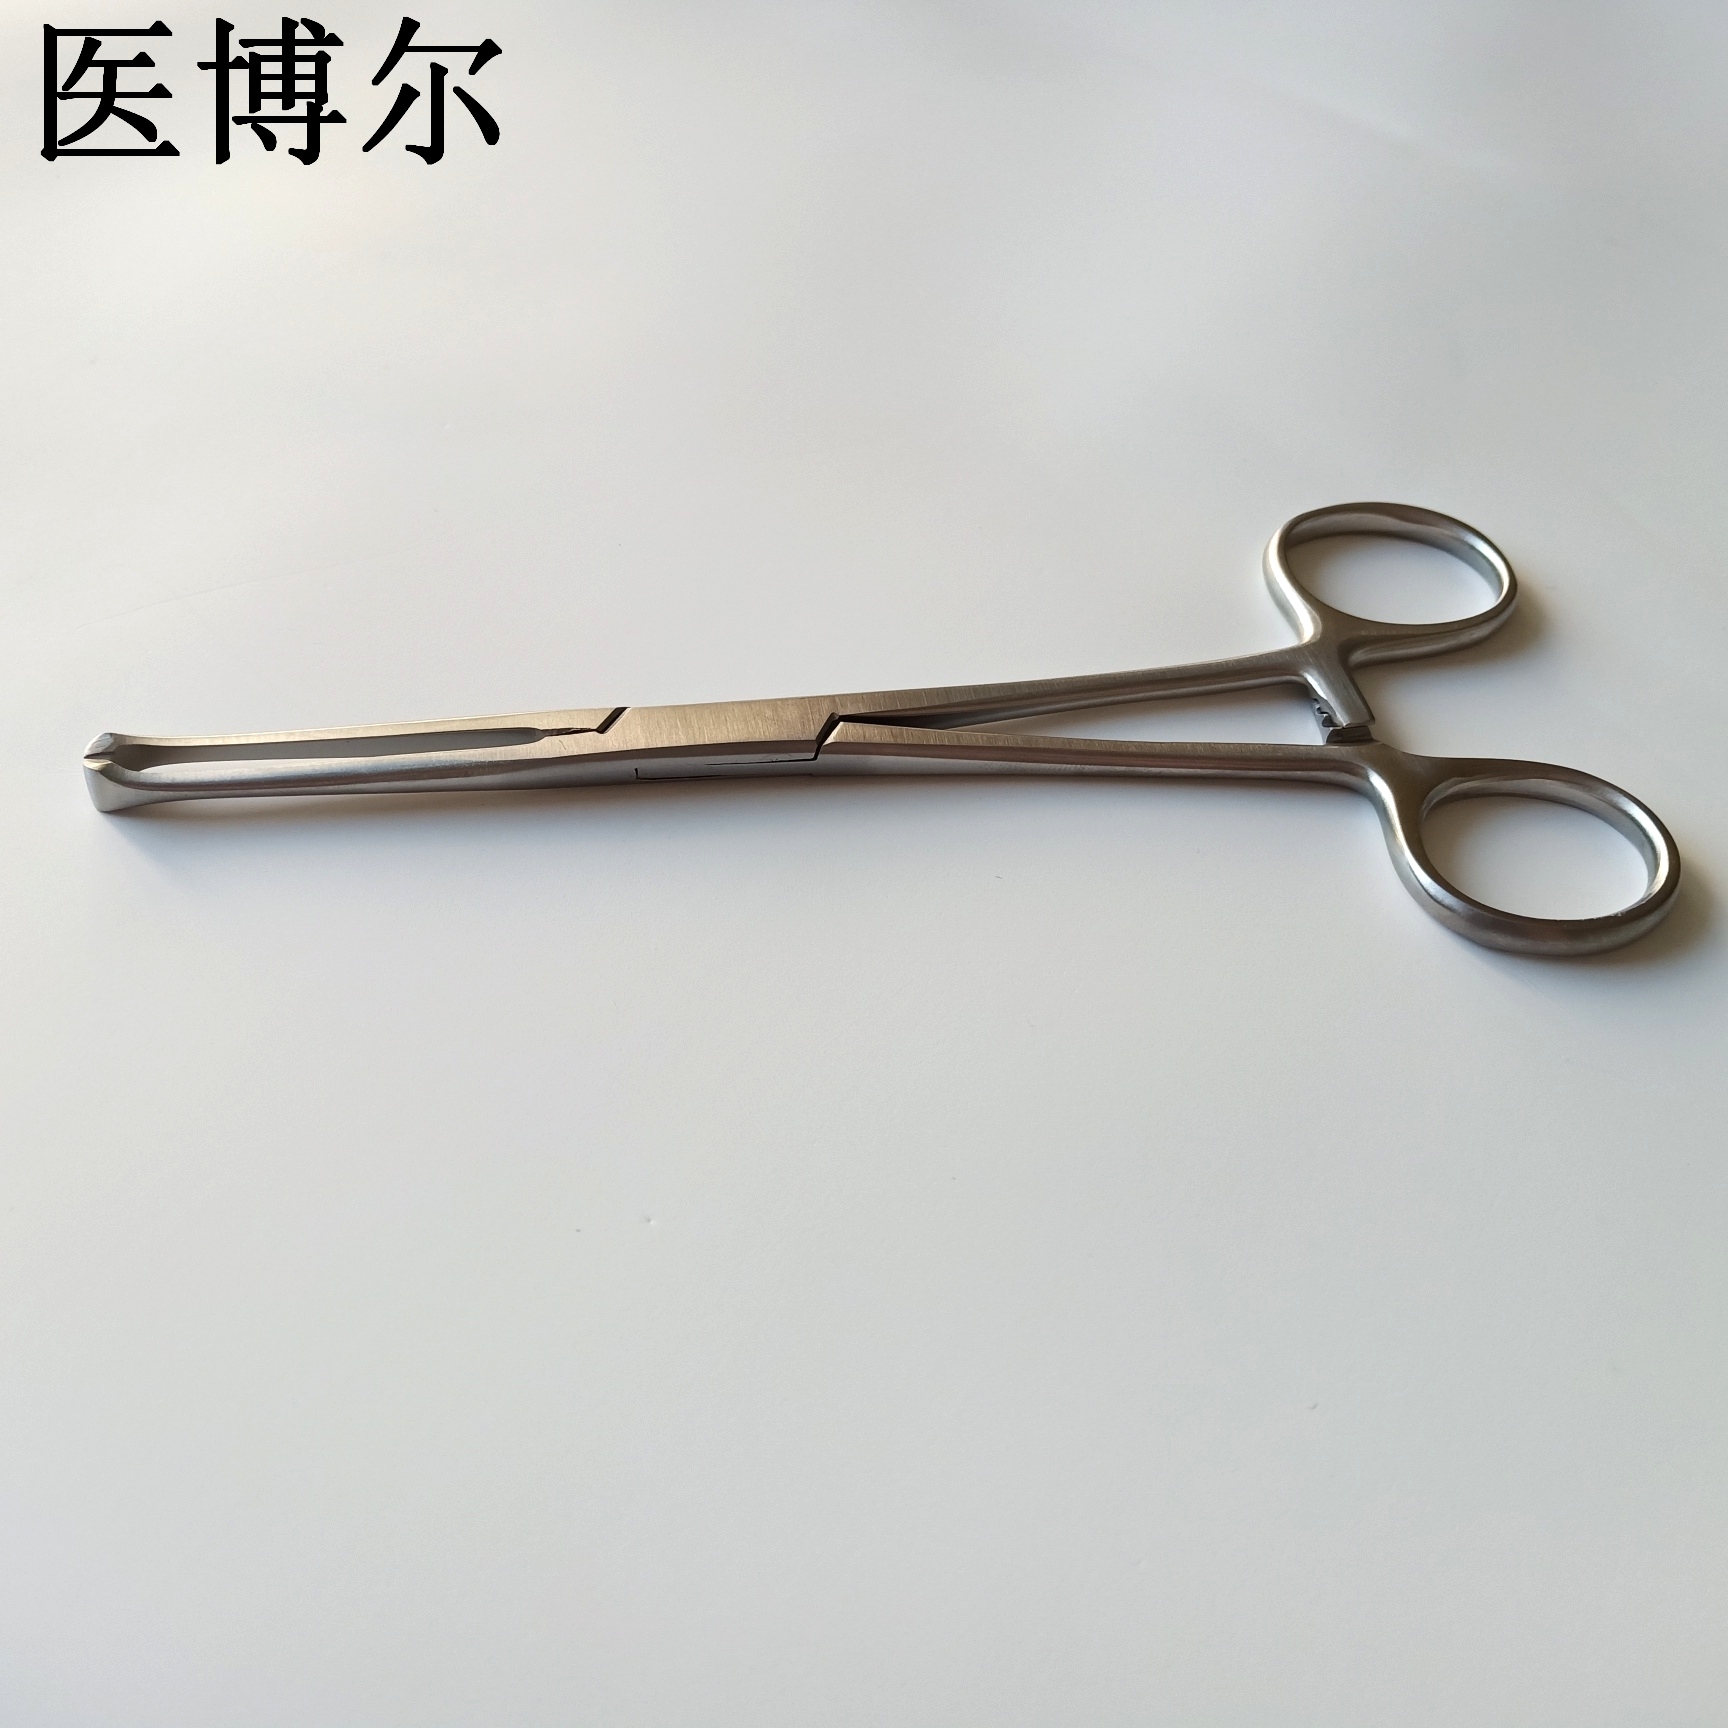 16cm组织钳 (3)_看图王.jpg